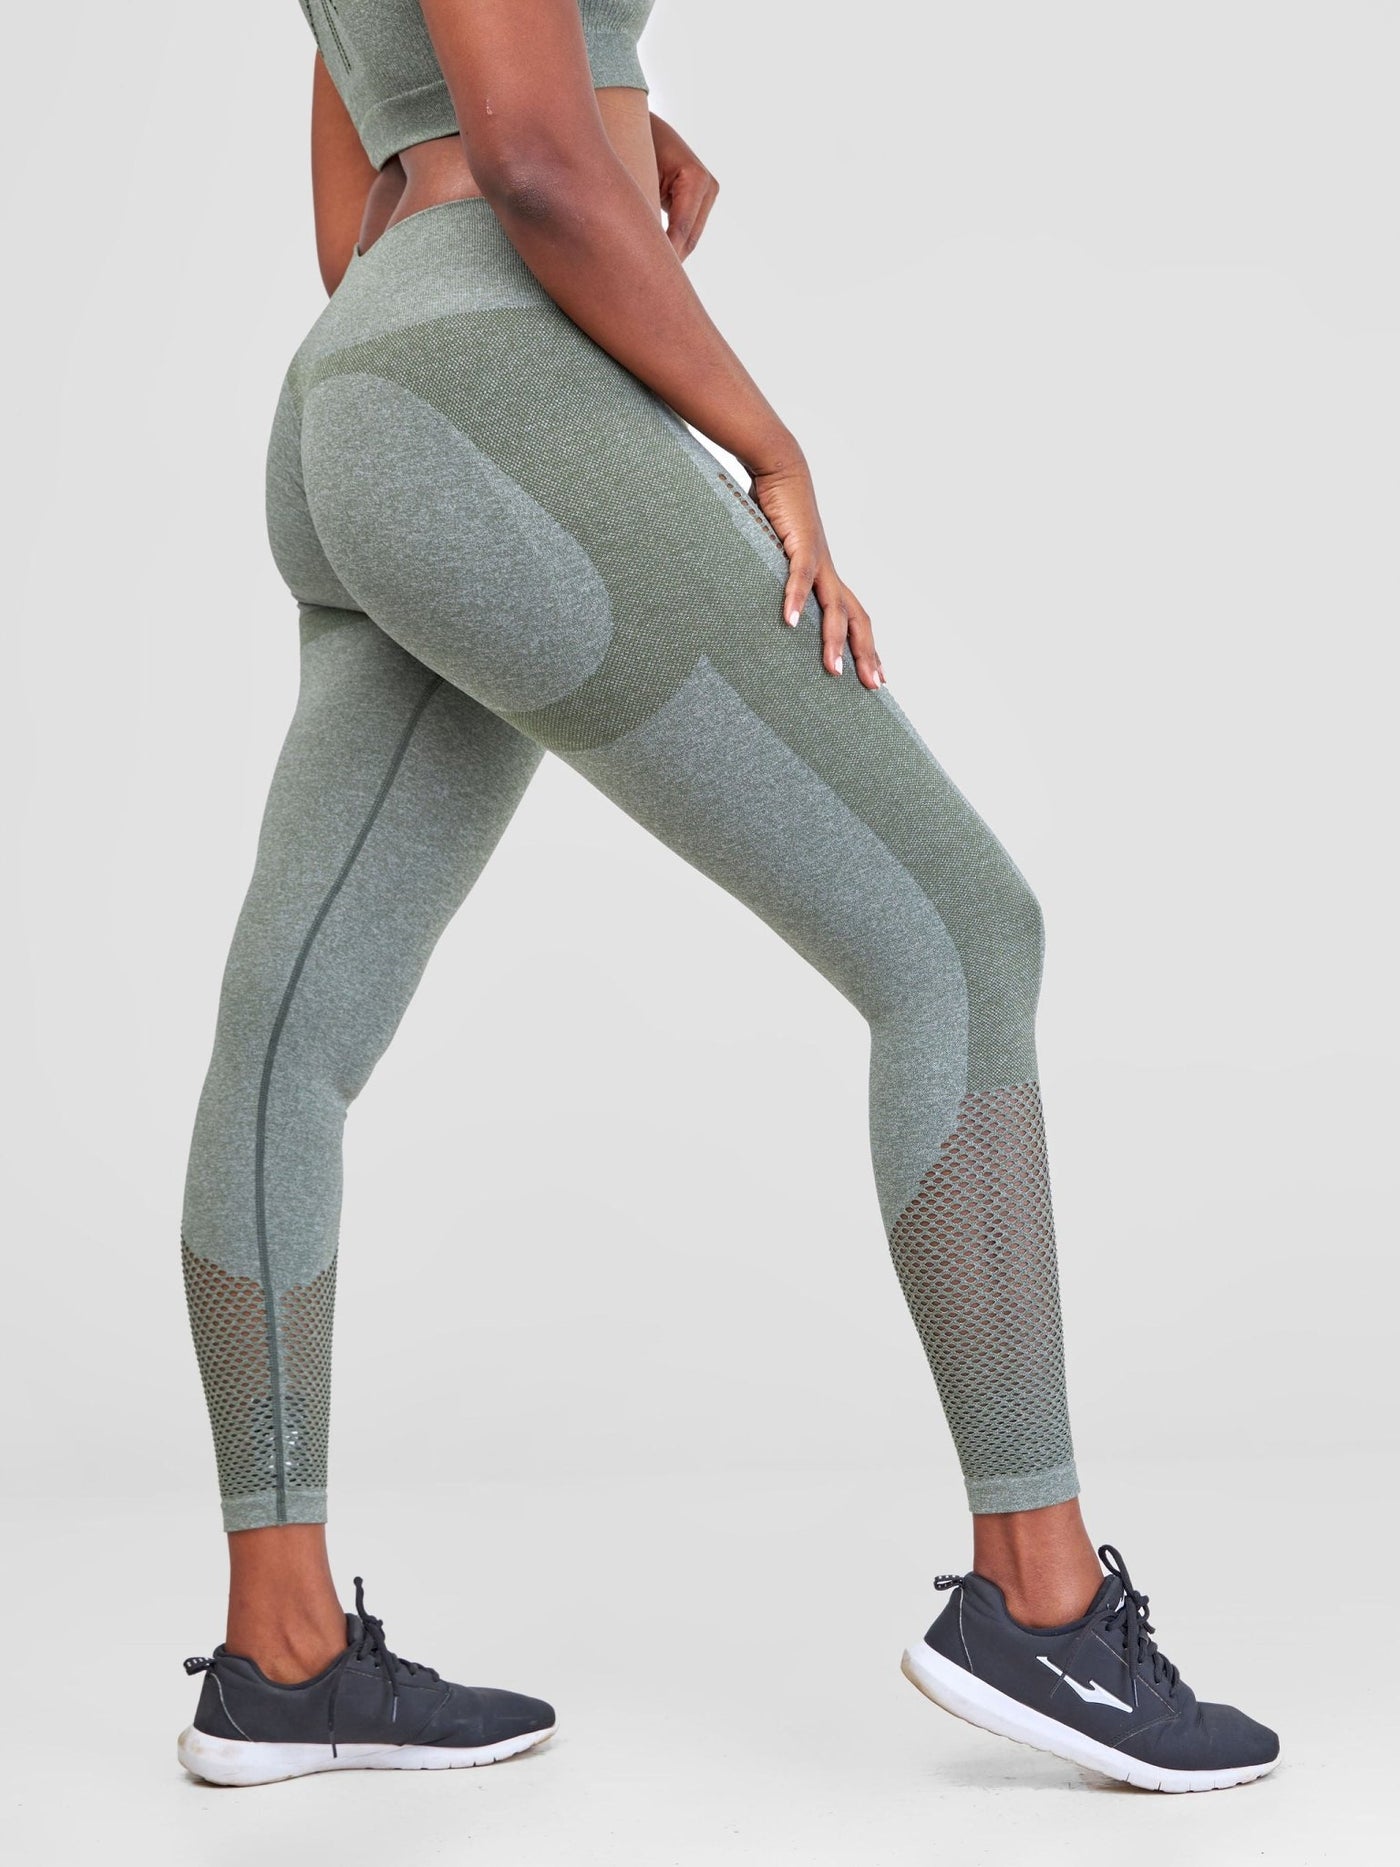 Ava Fitness Kira Pants Set - Army Green - Shopzetu